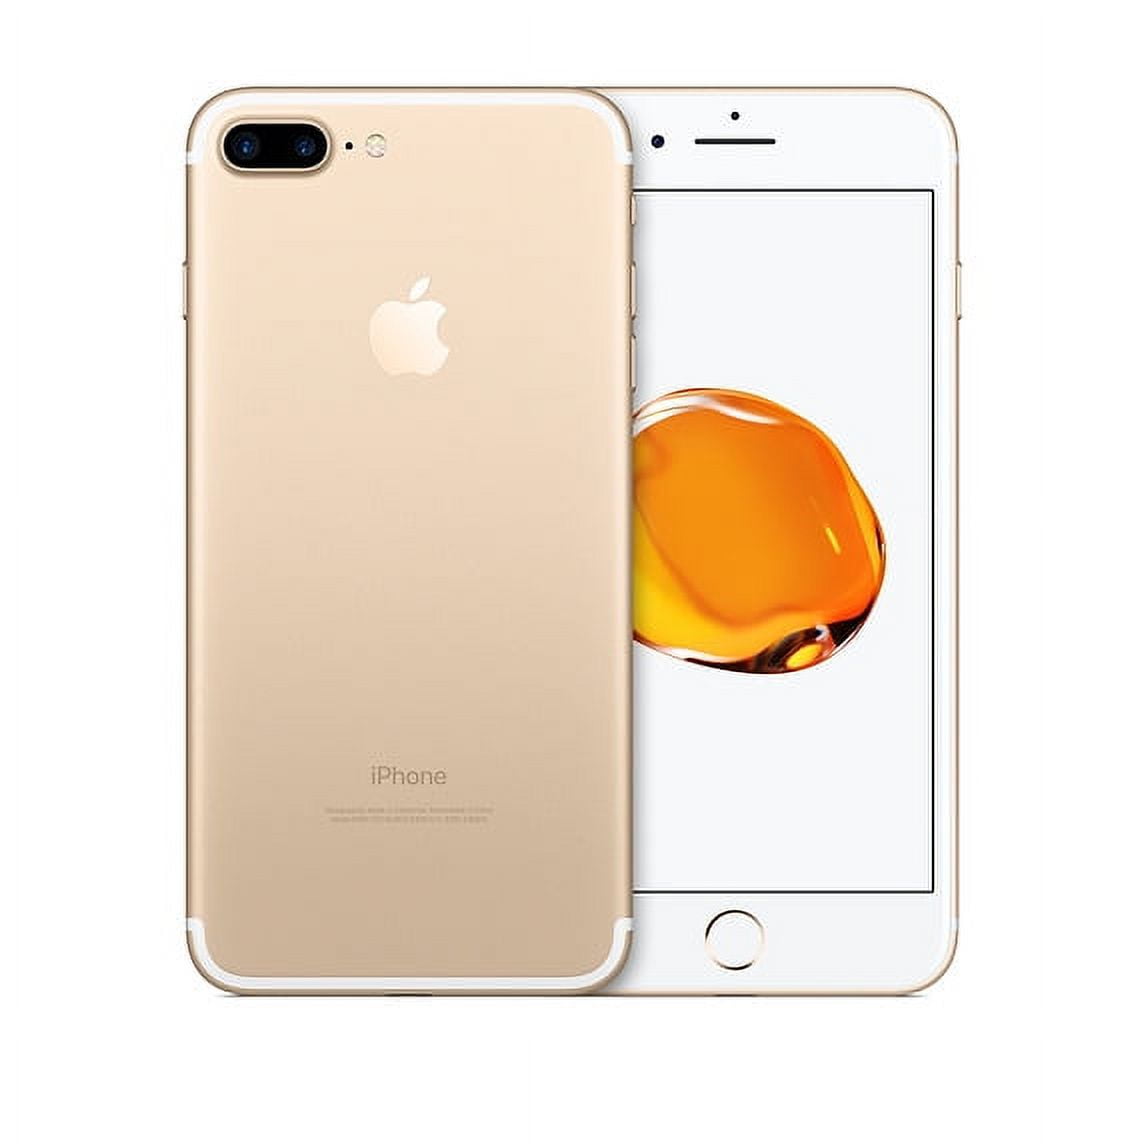 Restored Apple iPhone 7 Plus 128GB, Gold - Unlocked GSM